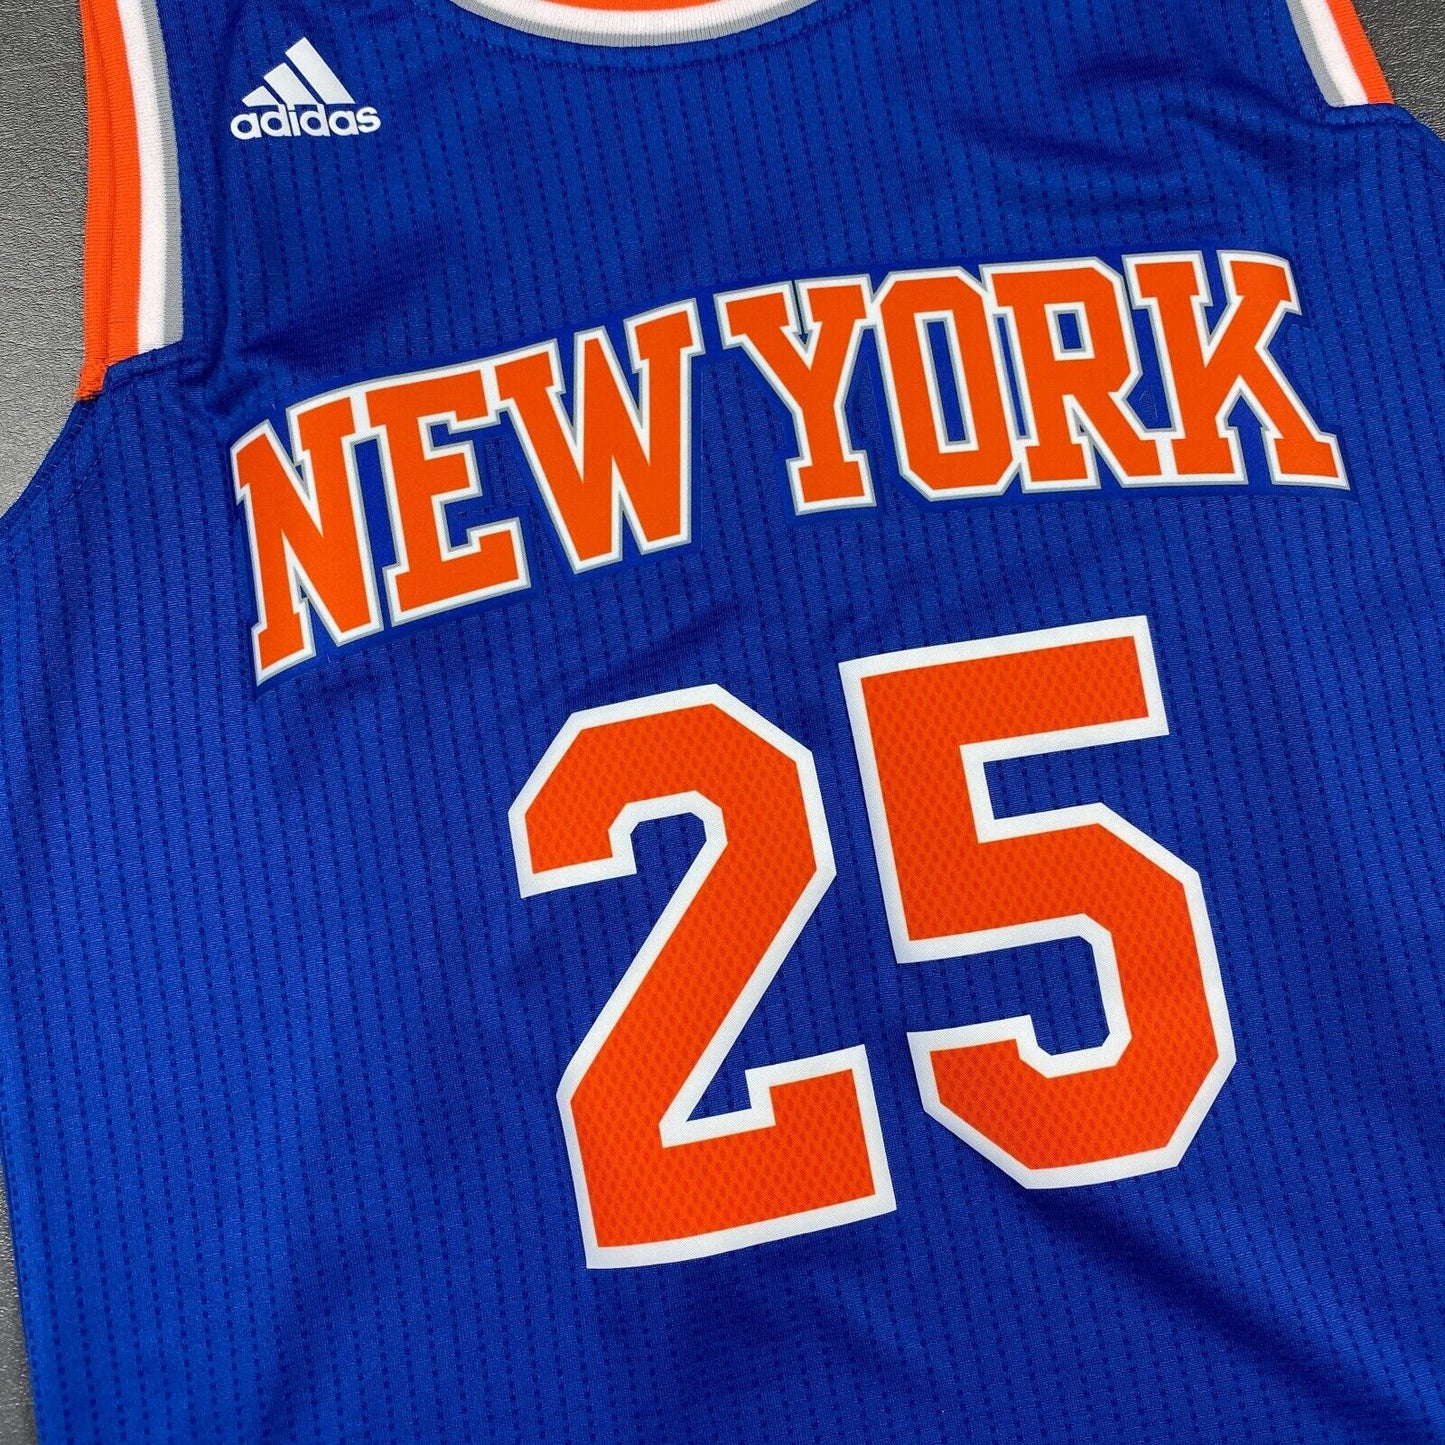 100% Authentic Derrick Rose Adidas Rev 30 Knicks Jersey Size S ( M ) Mens